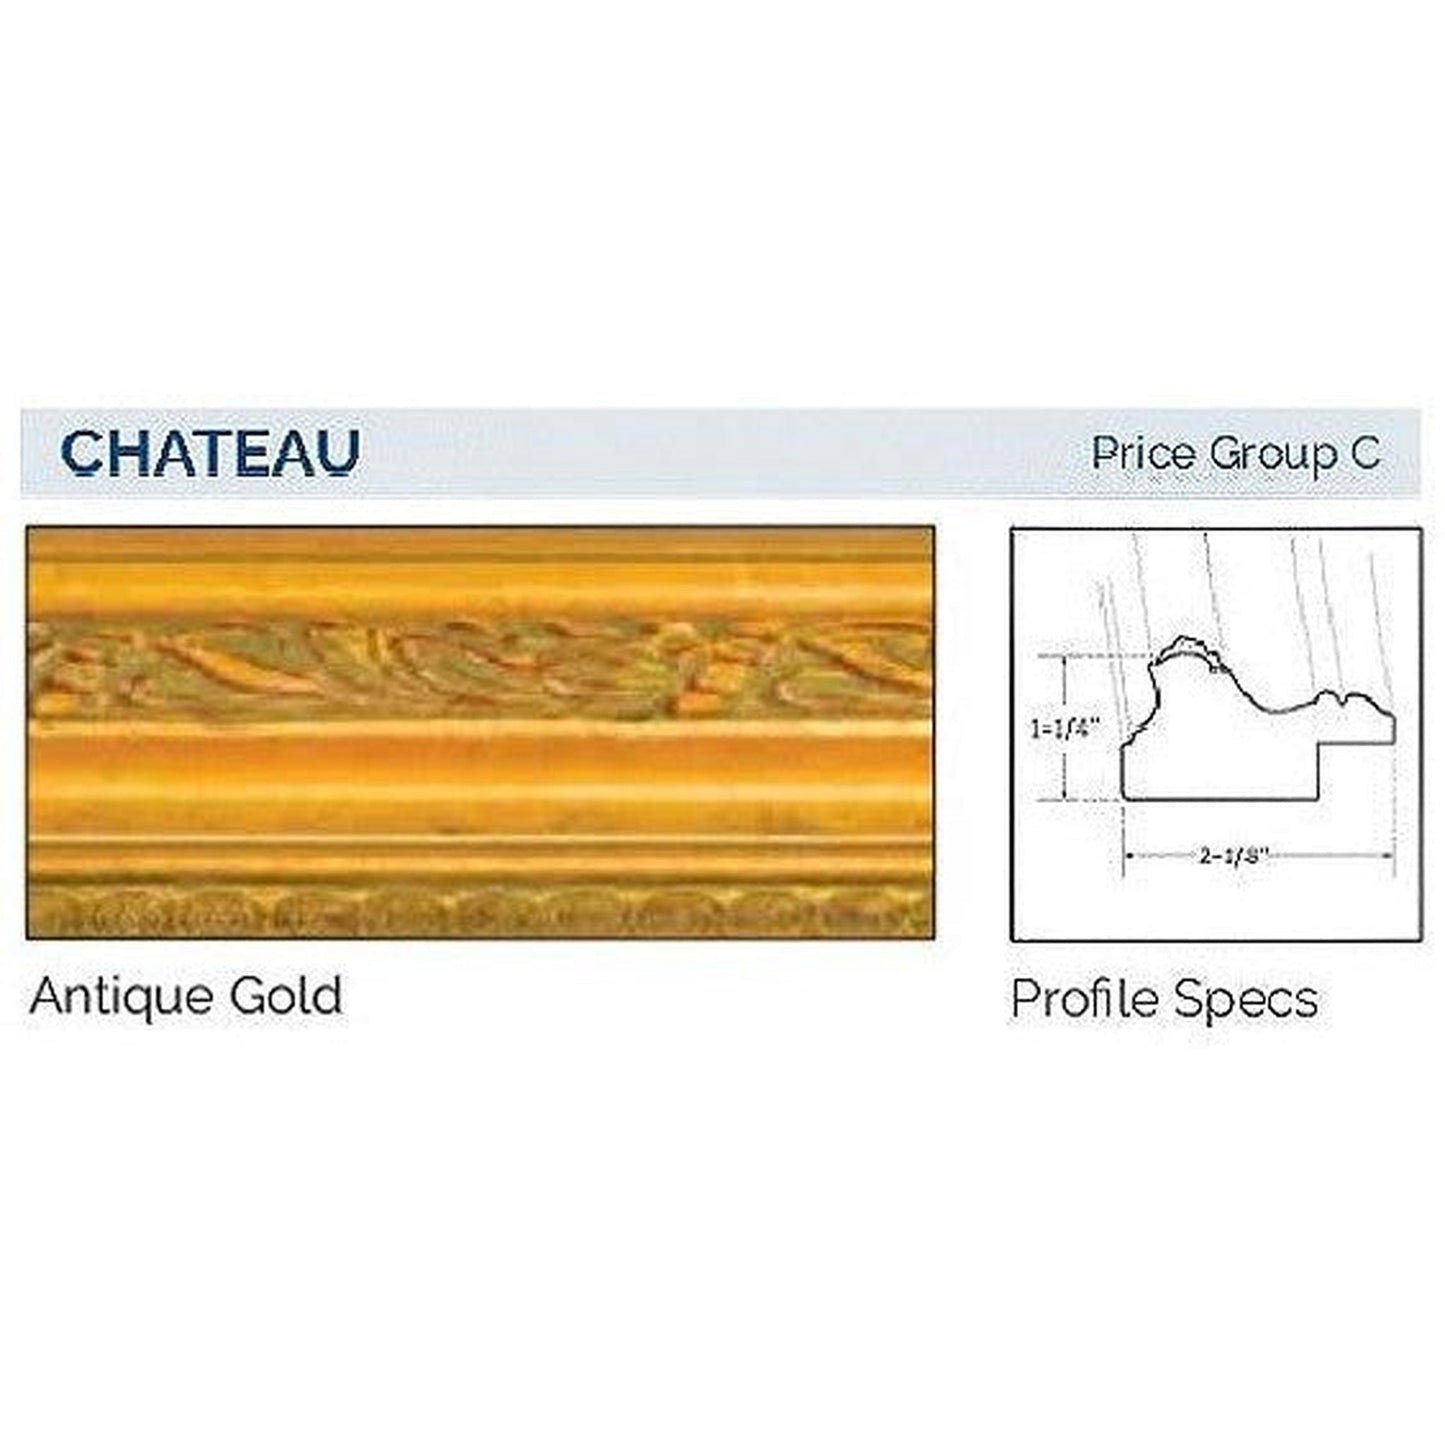 Afina Signature 27" x 21" Chateau Antique Gold Recessed Retro-Fit Double Door Medicine Cabinet With Beveled Edge Mirror